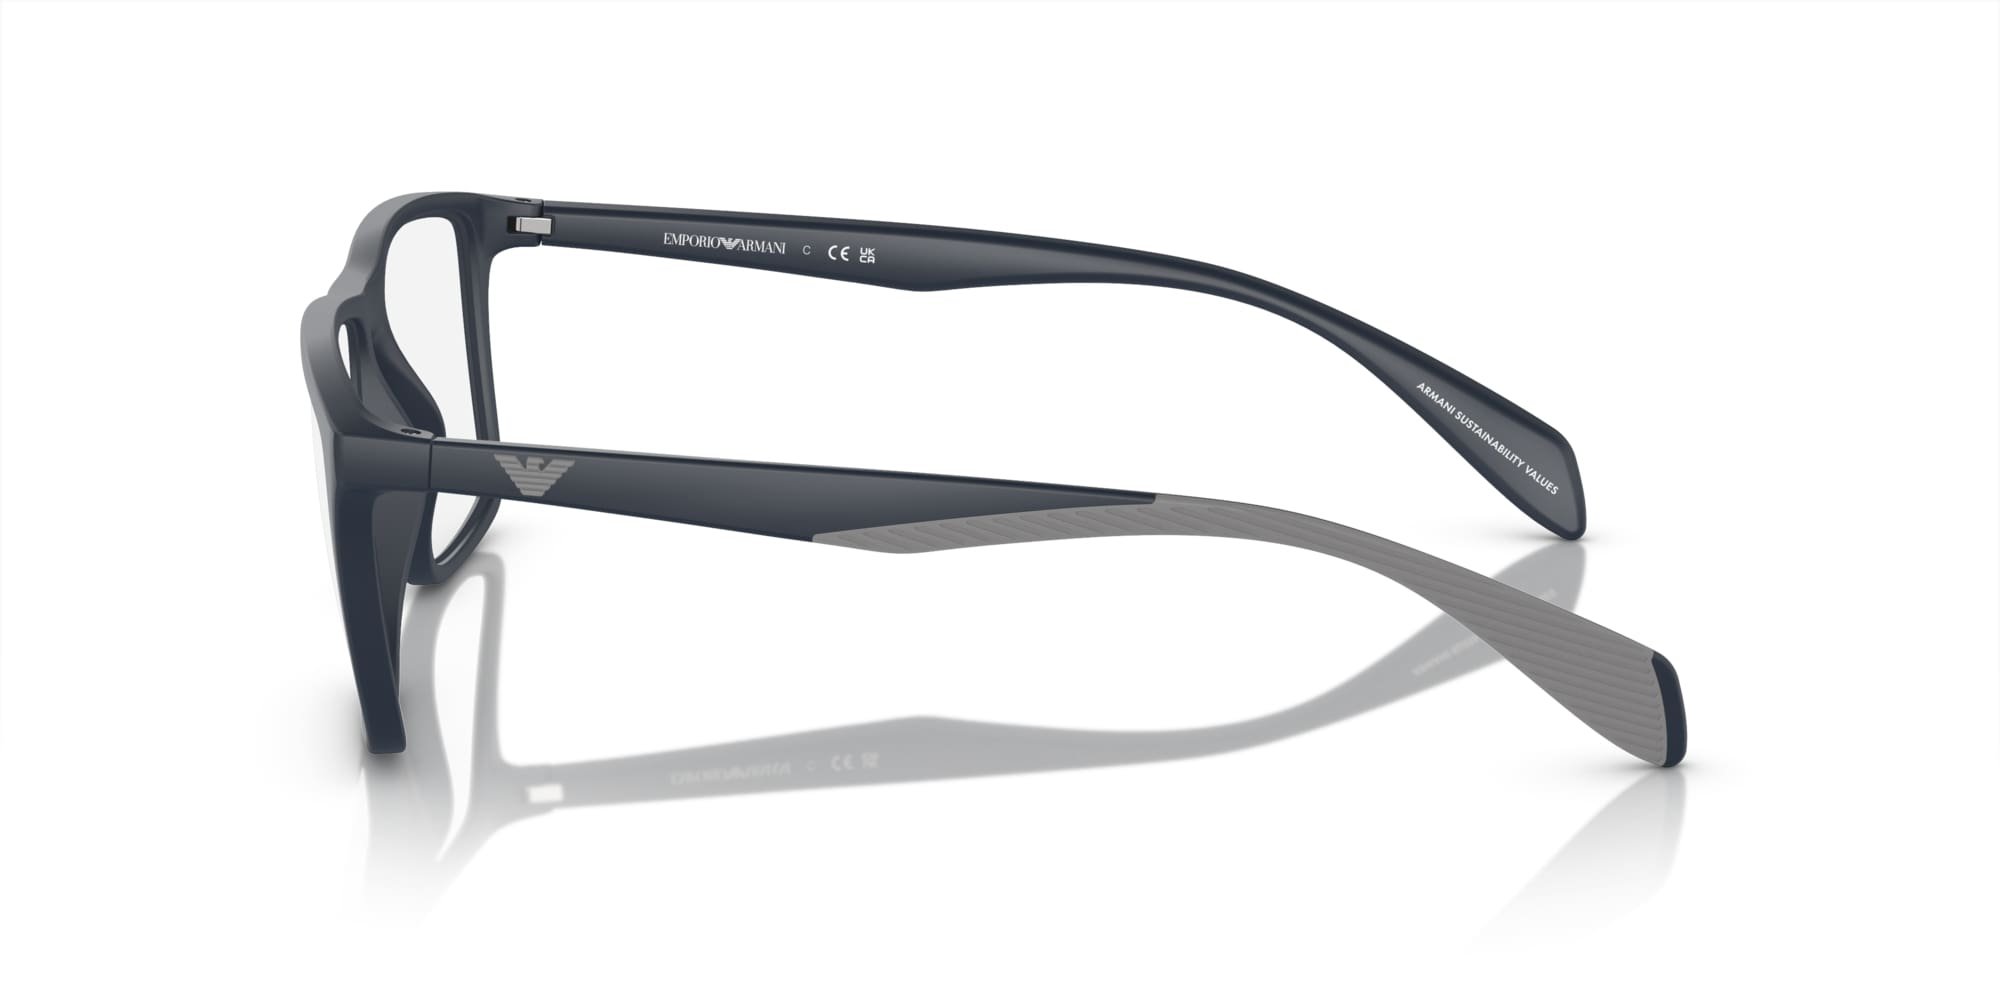 Emporio Armani Brille für Herren in blau matt EA3230 5088 53